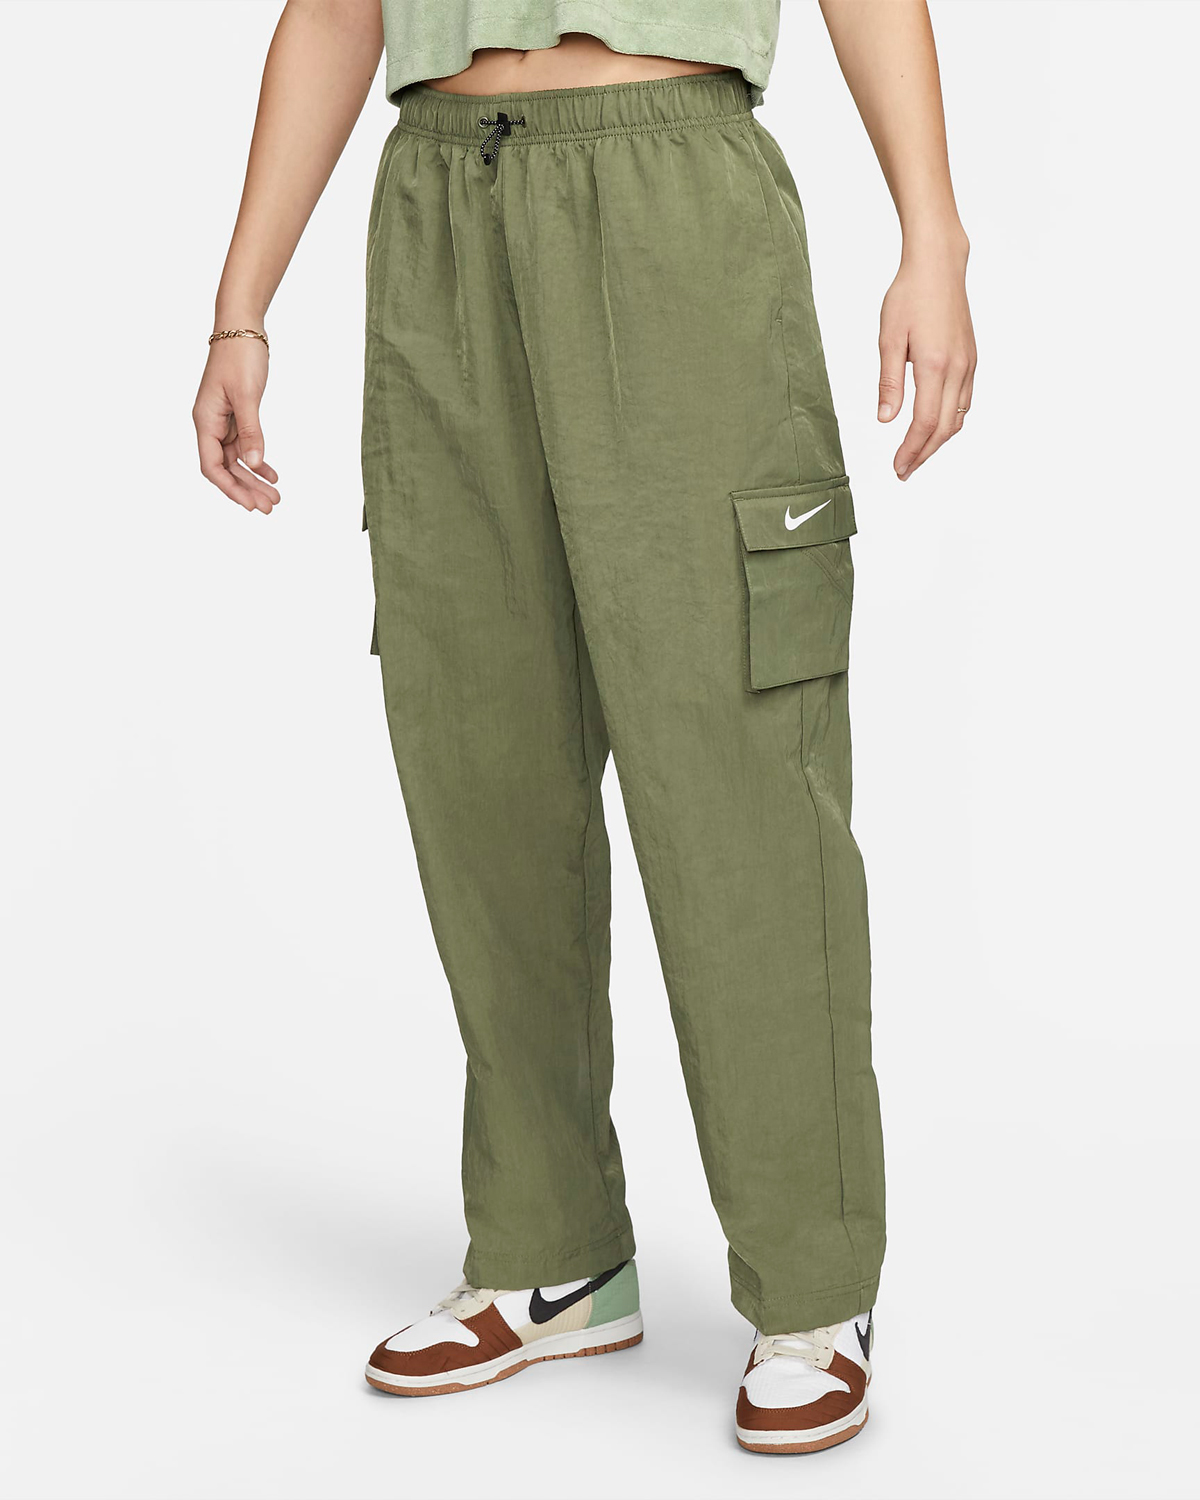 Nike-Sportswear-Womens-Cargo-Pants-Medium-Olive